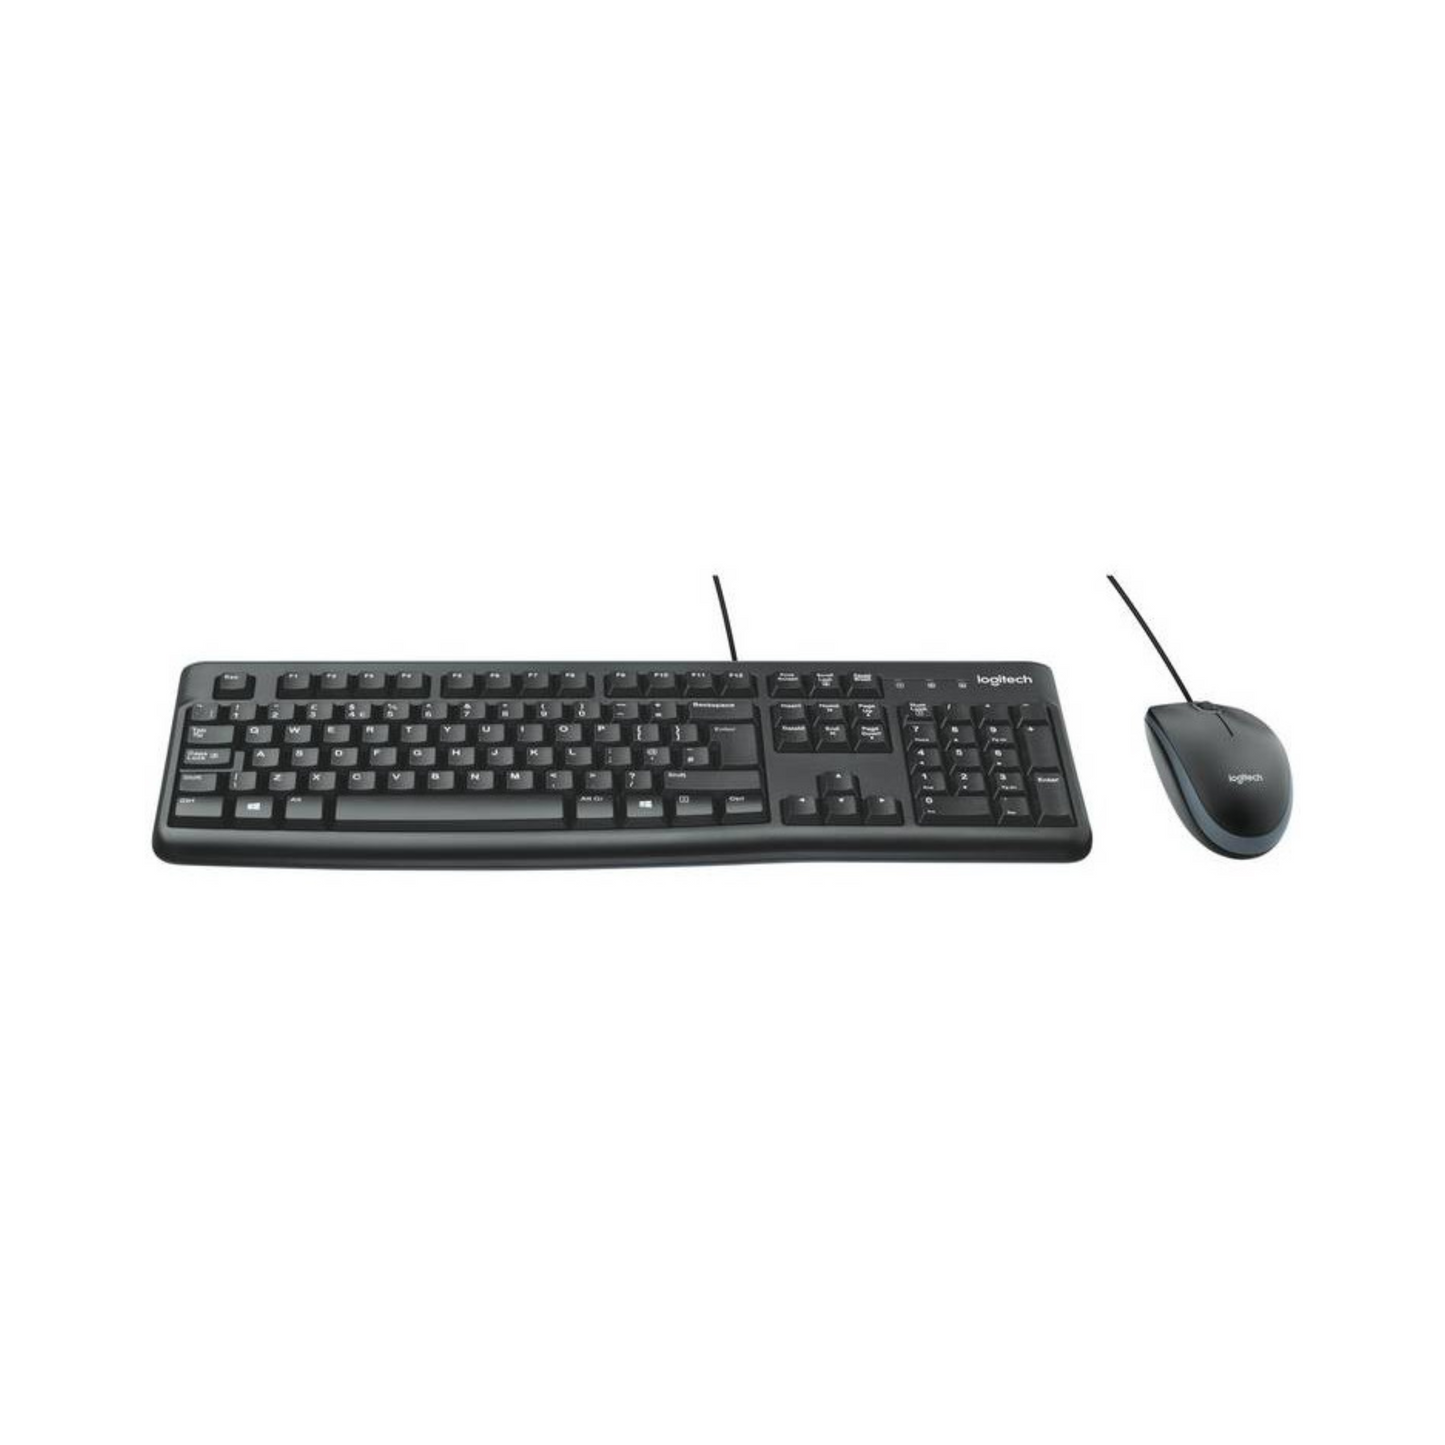 Logitech MK120 desktop USB keyboard and USB mouse